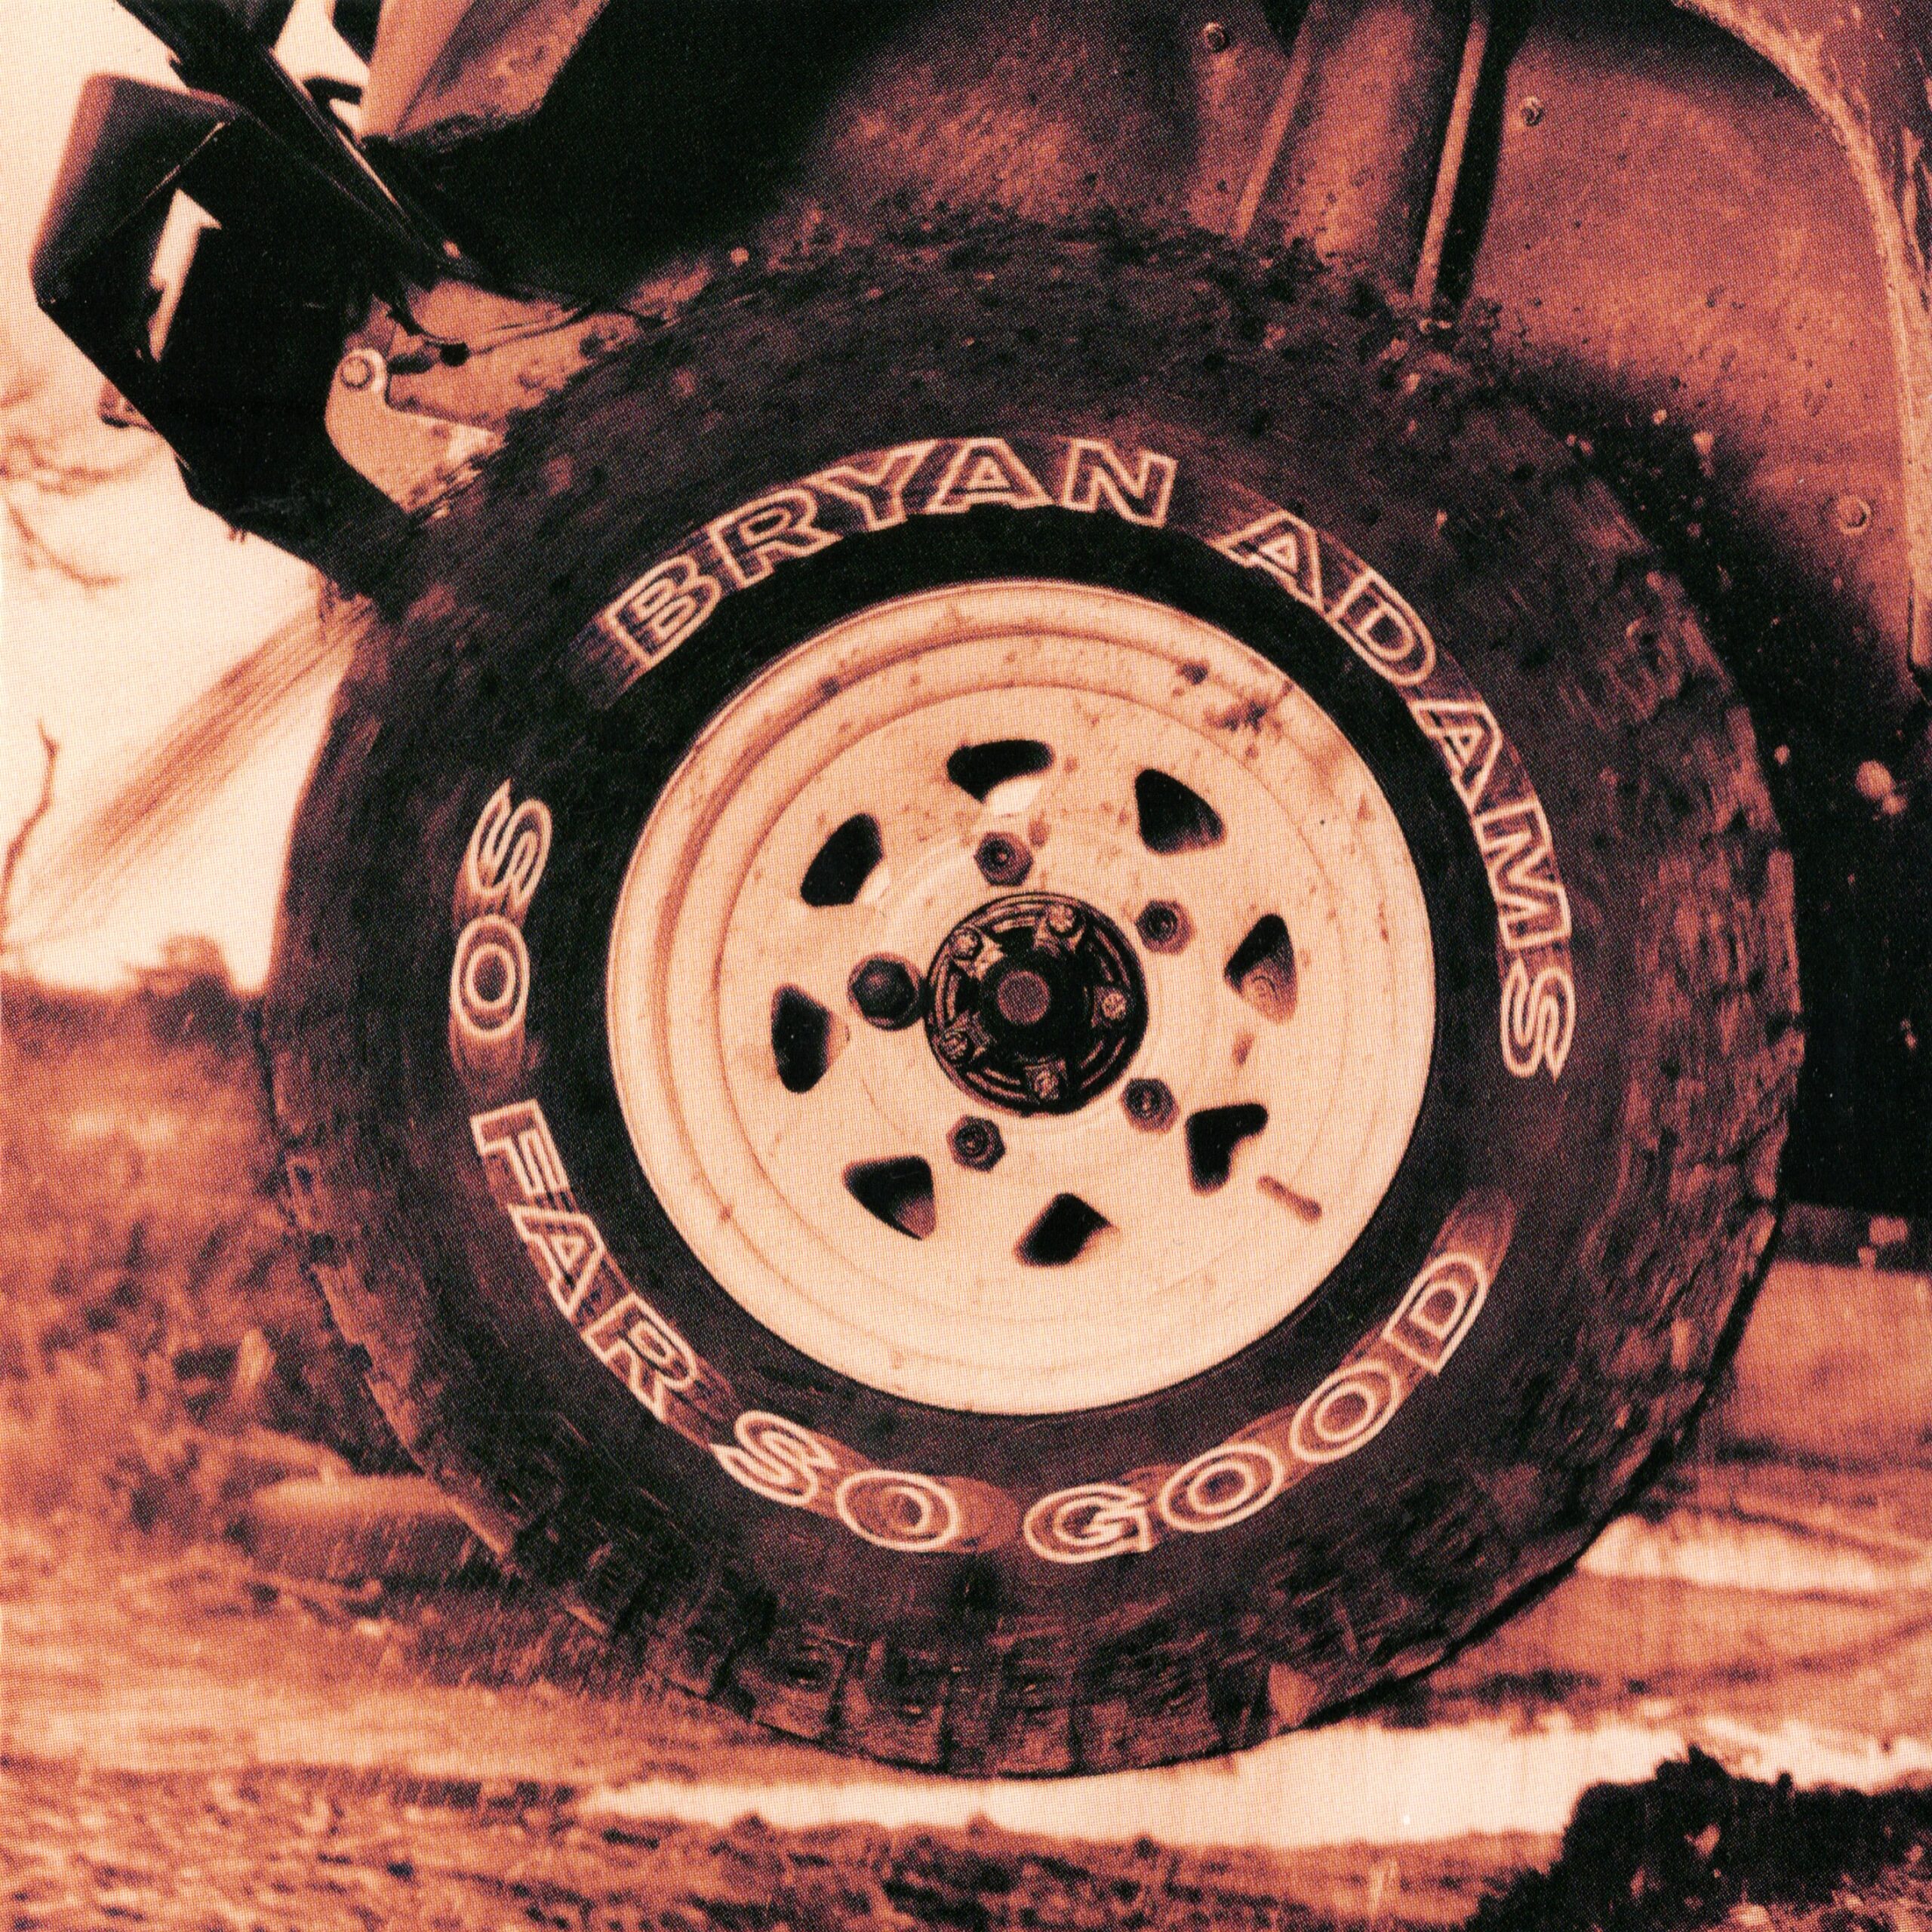 Bryan Adams’ unusual Land Rover hid in plain sight